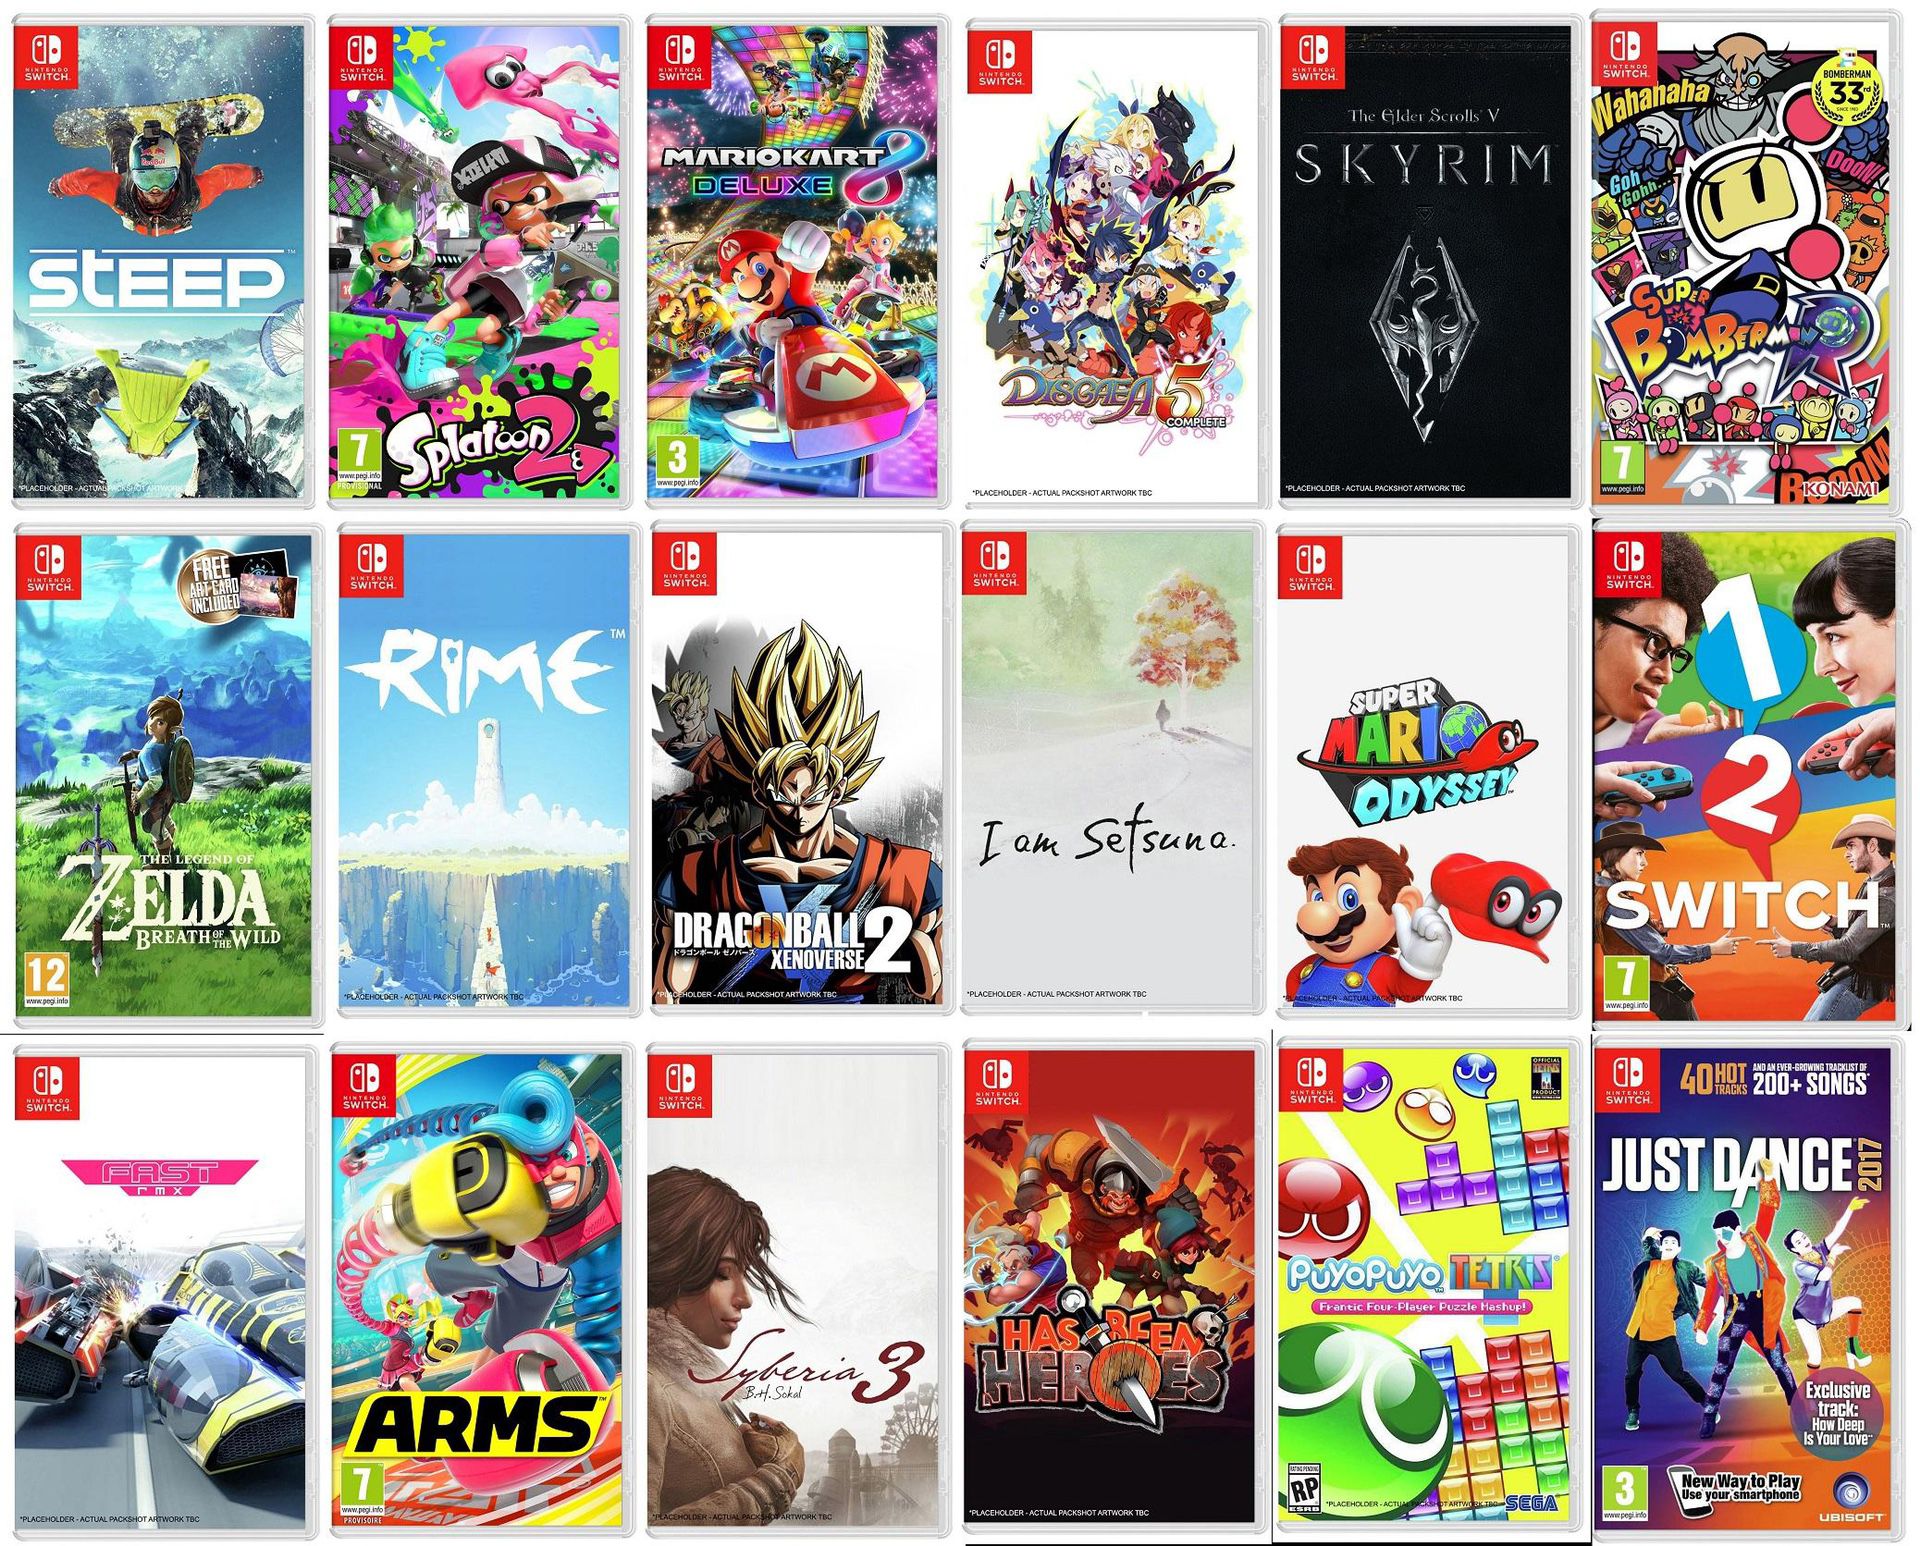 !SOLD OUT! Nintendo Switch Games (Digital Downloads) Animal Crossing: New Horizons, Super Smash Bros, Mario Kart 8